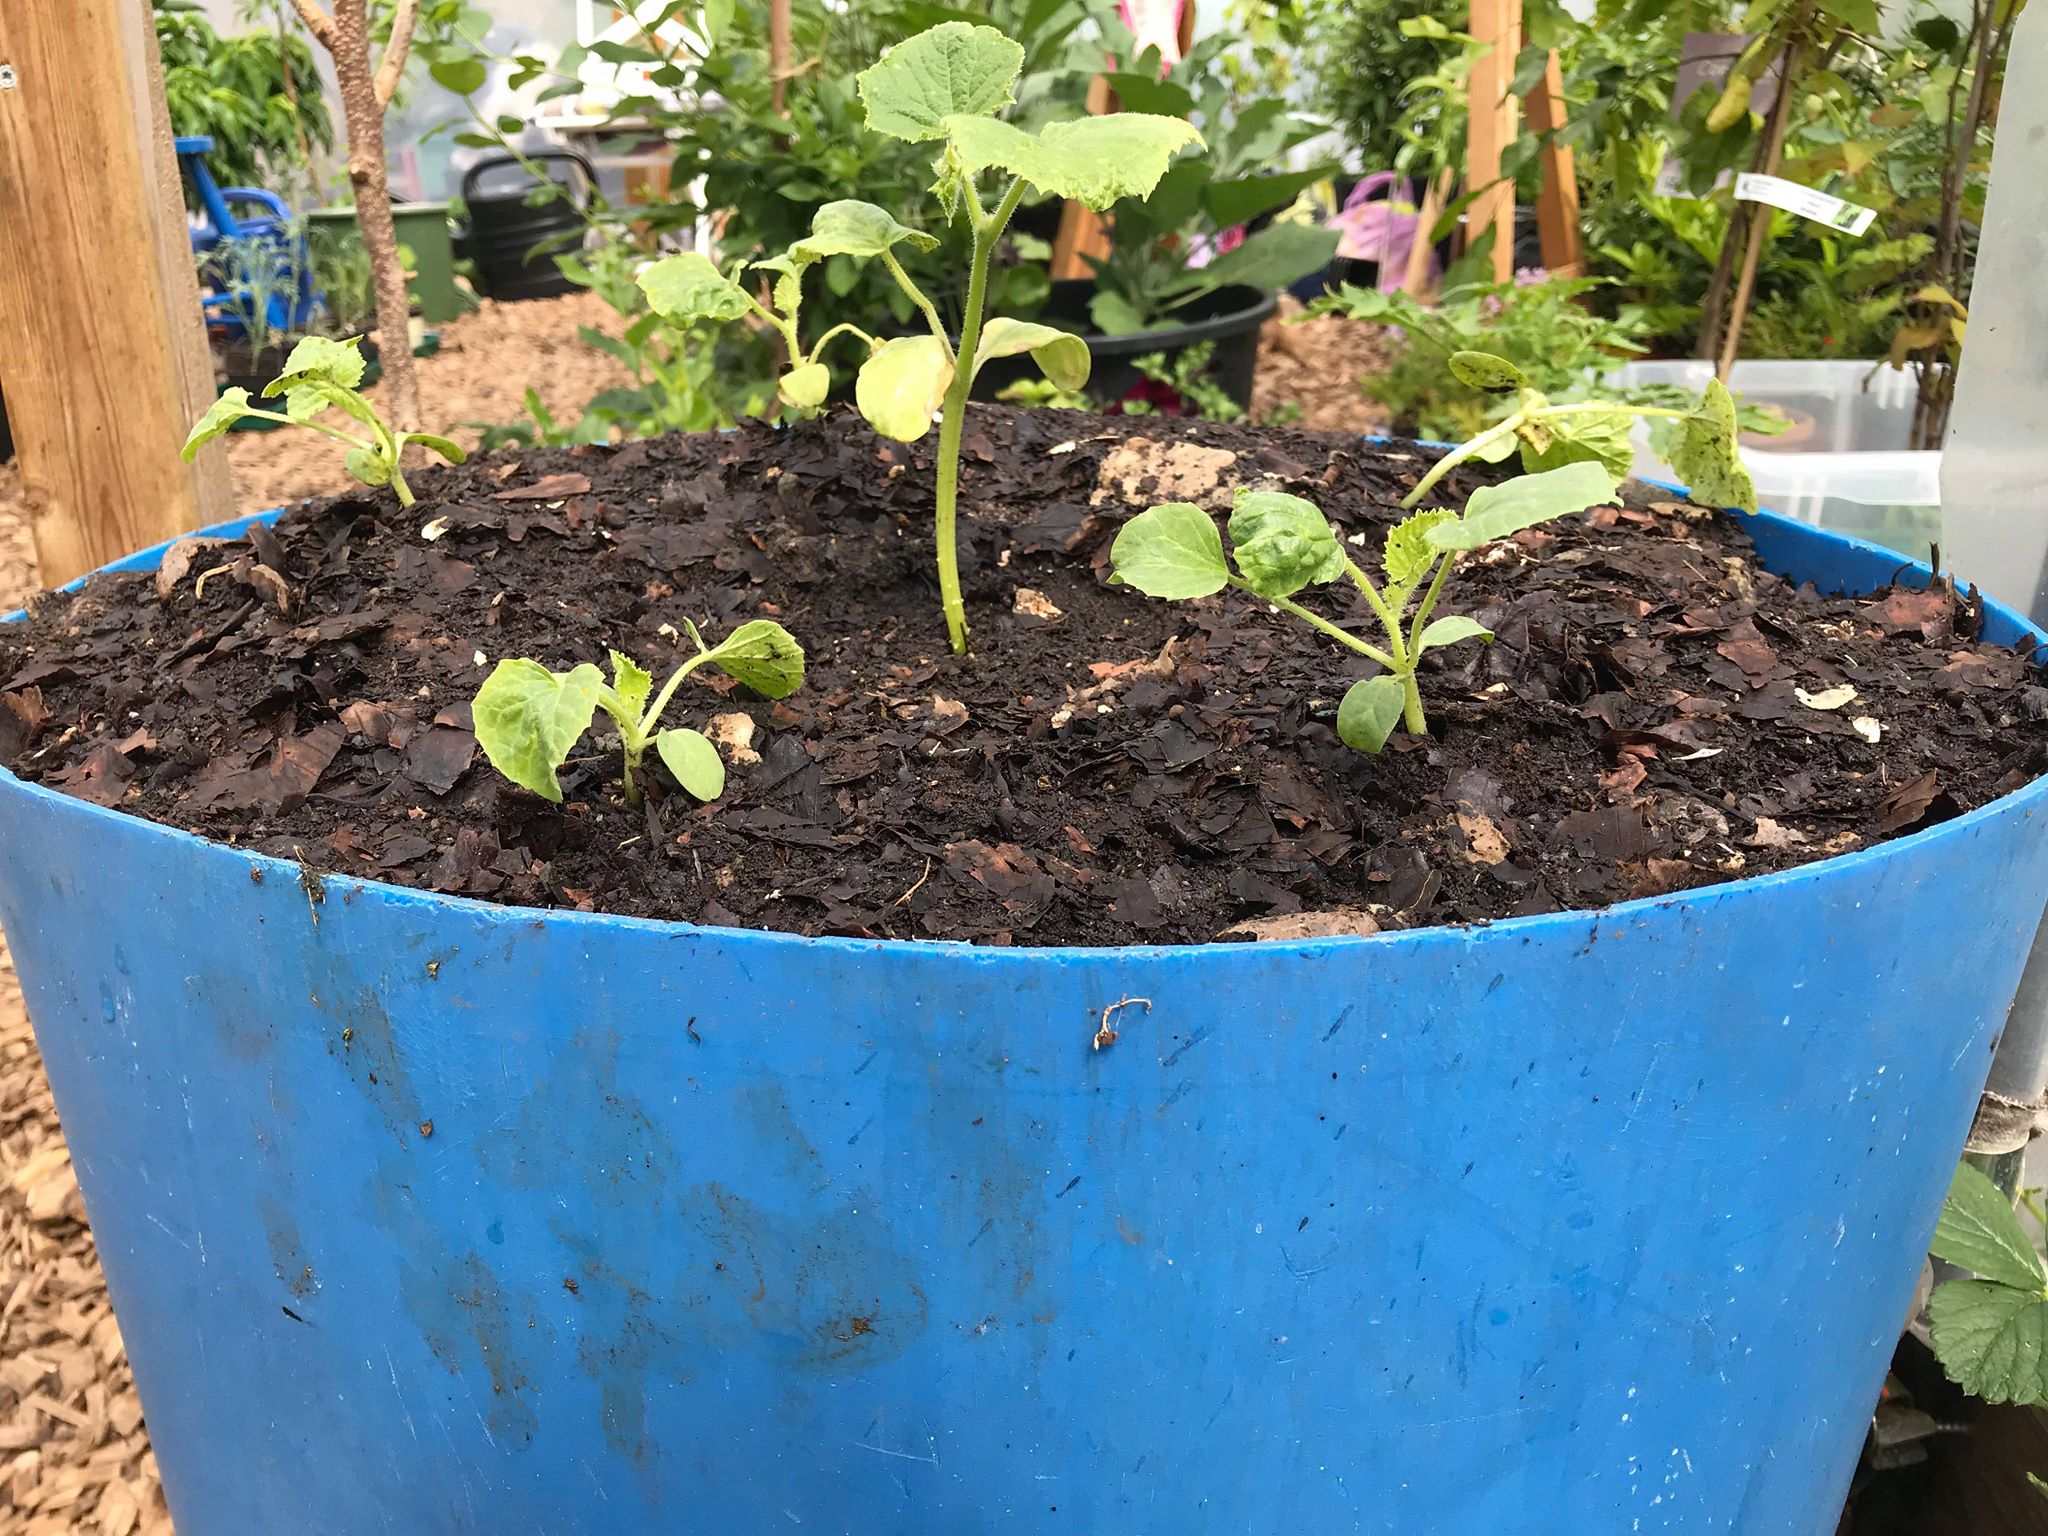 En blå tunna är fylld med mörk mylla och små melonplantor. Growing vegetables in compost, a blue container filled with soil and little melon plants.